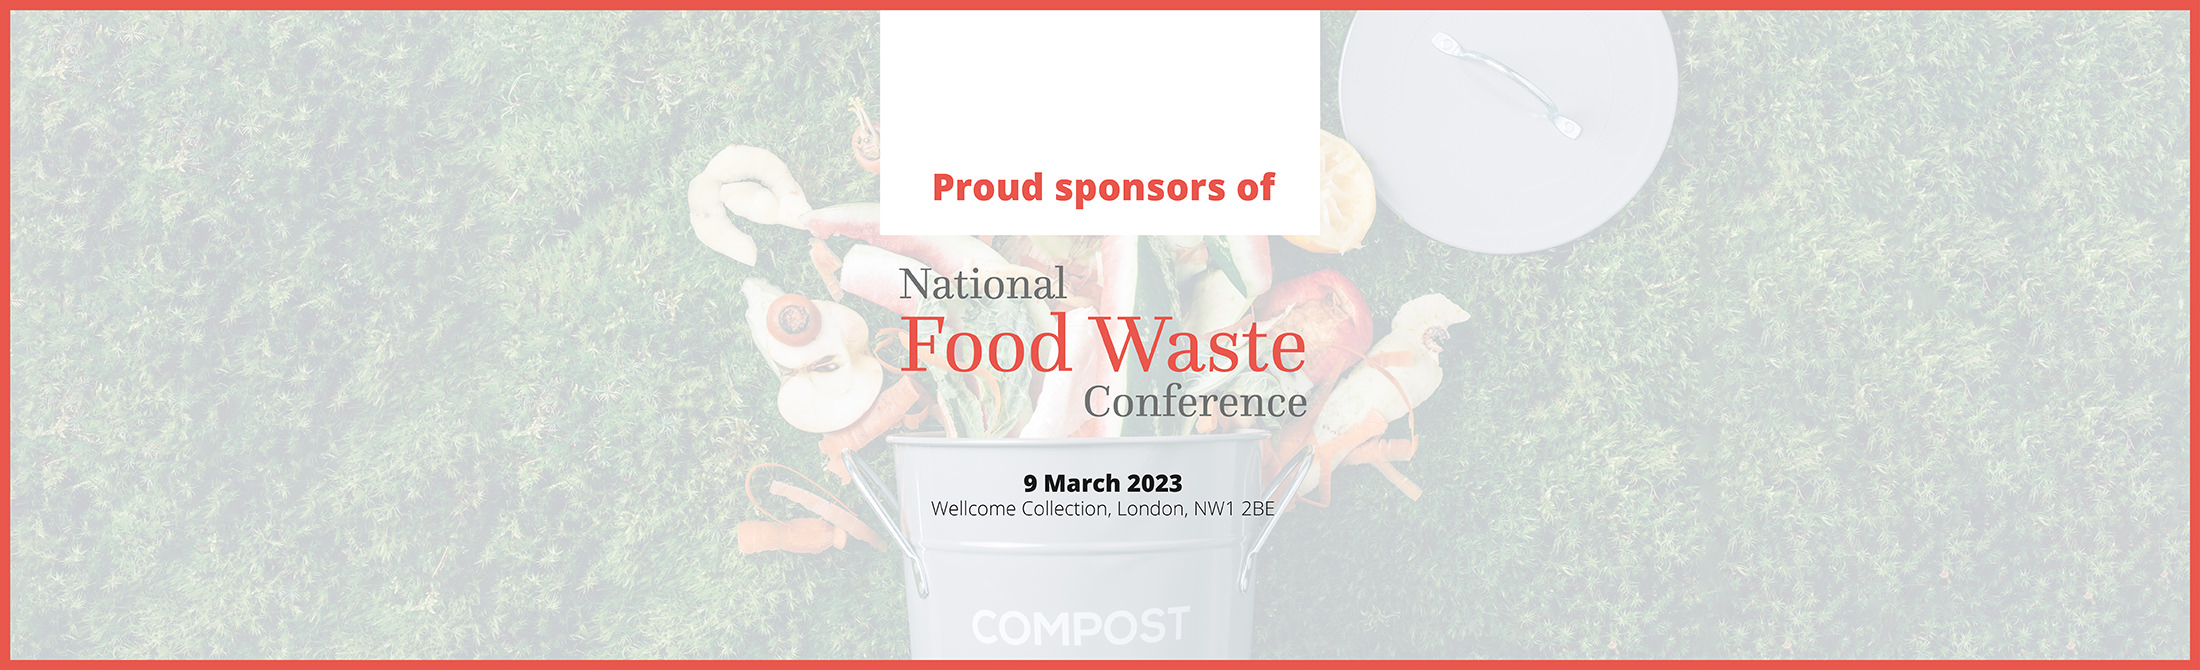 National Food Waste Conference